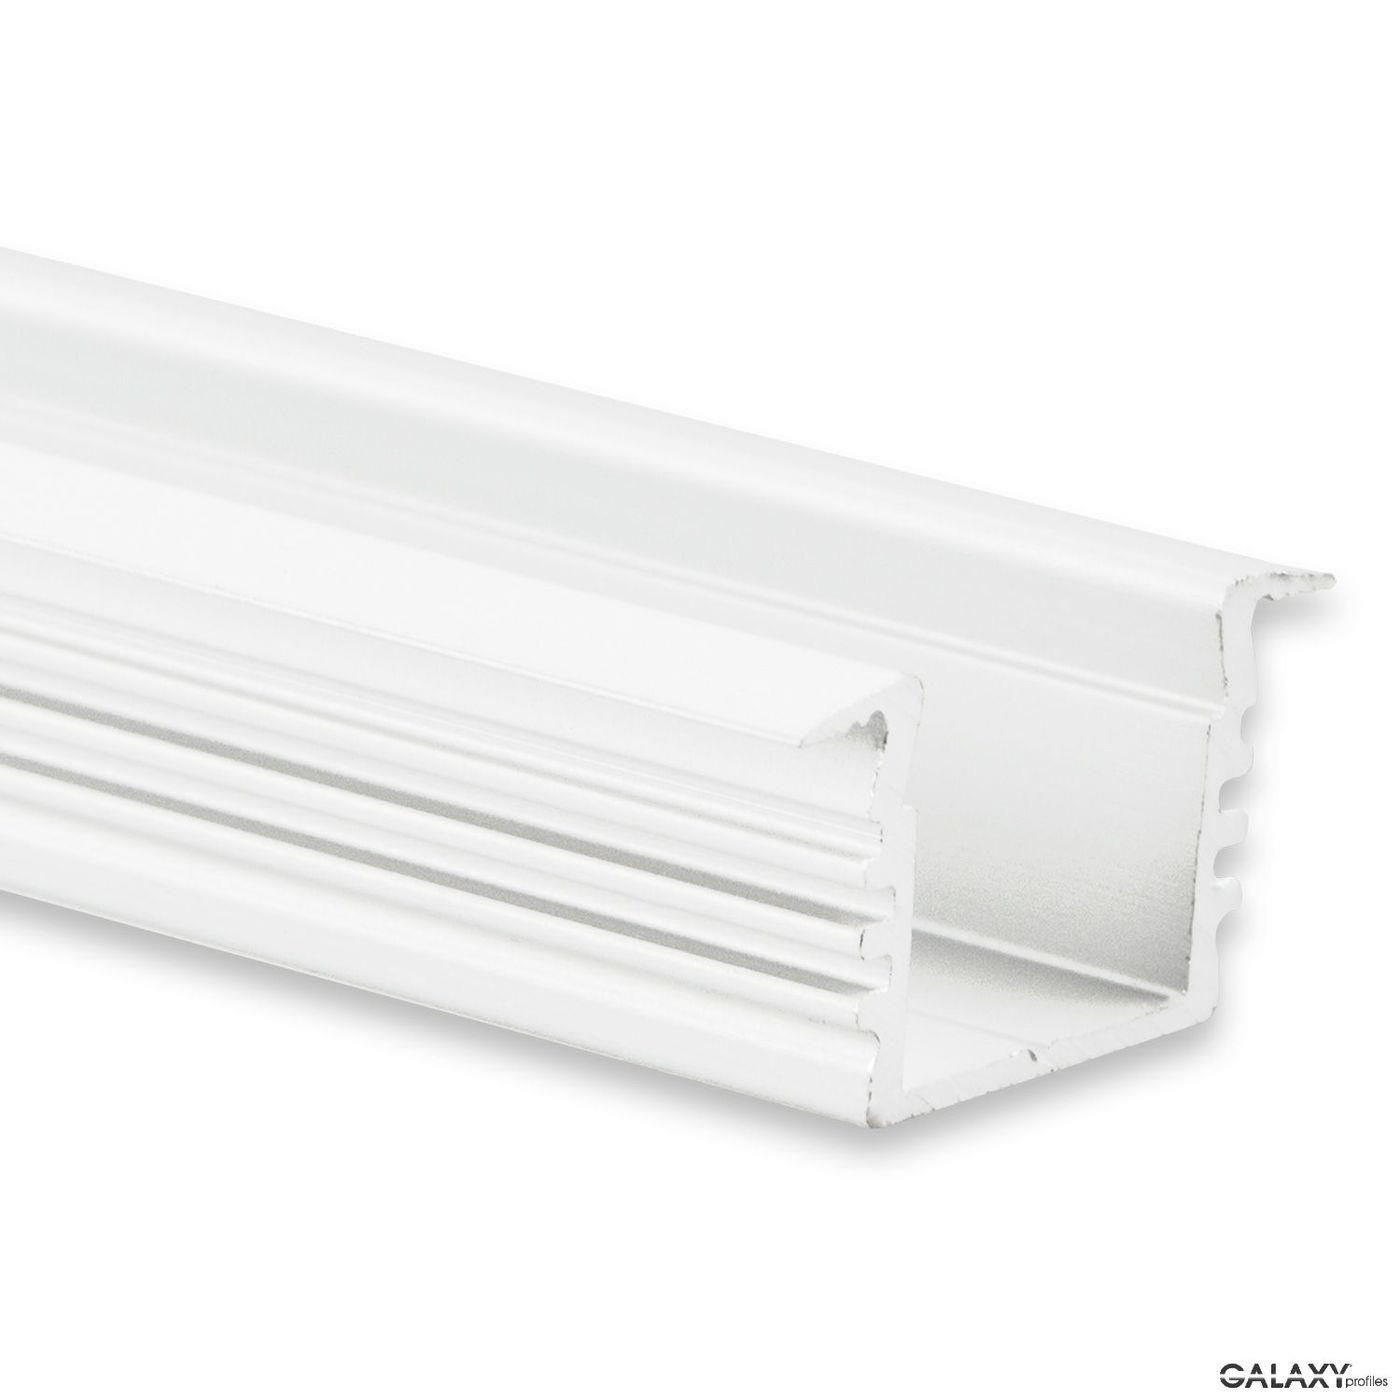 1m LED Profil PL3 Weiß 23,1x13mm Aluminium Einbauprofil für 12mm LED Streifen